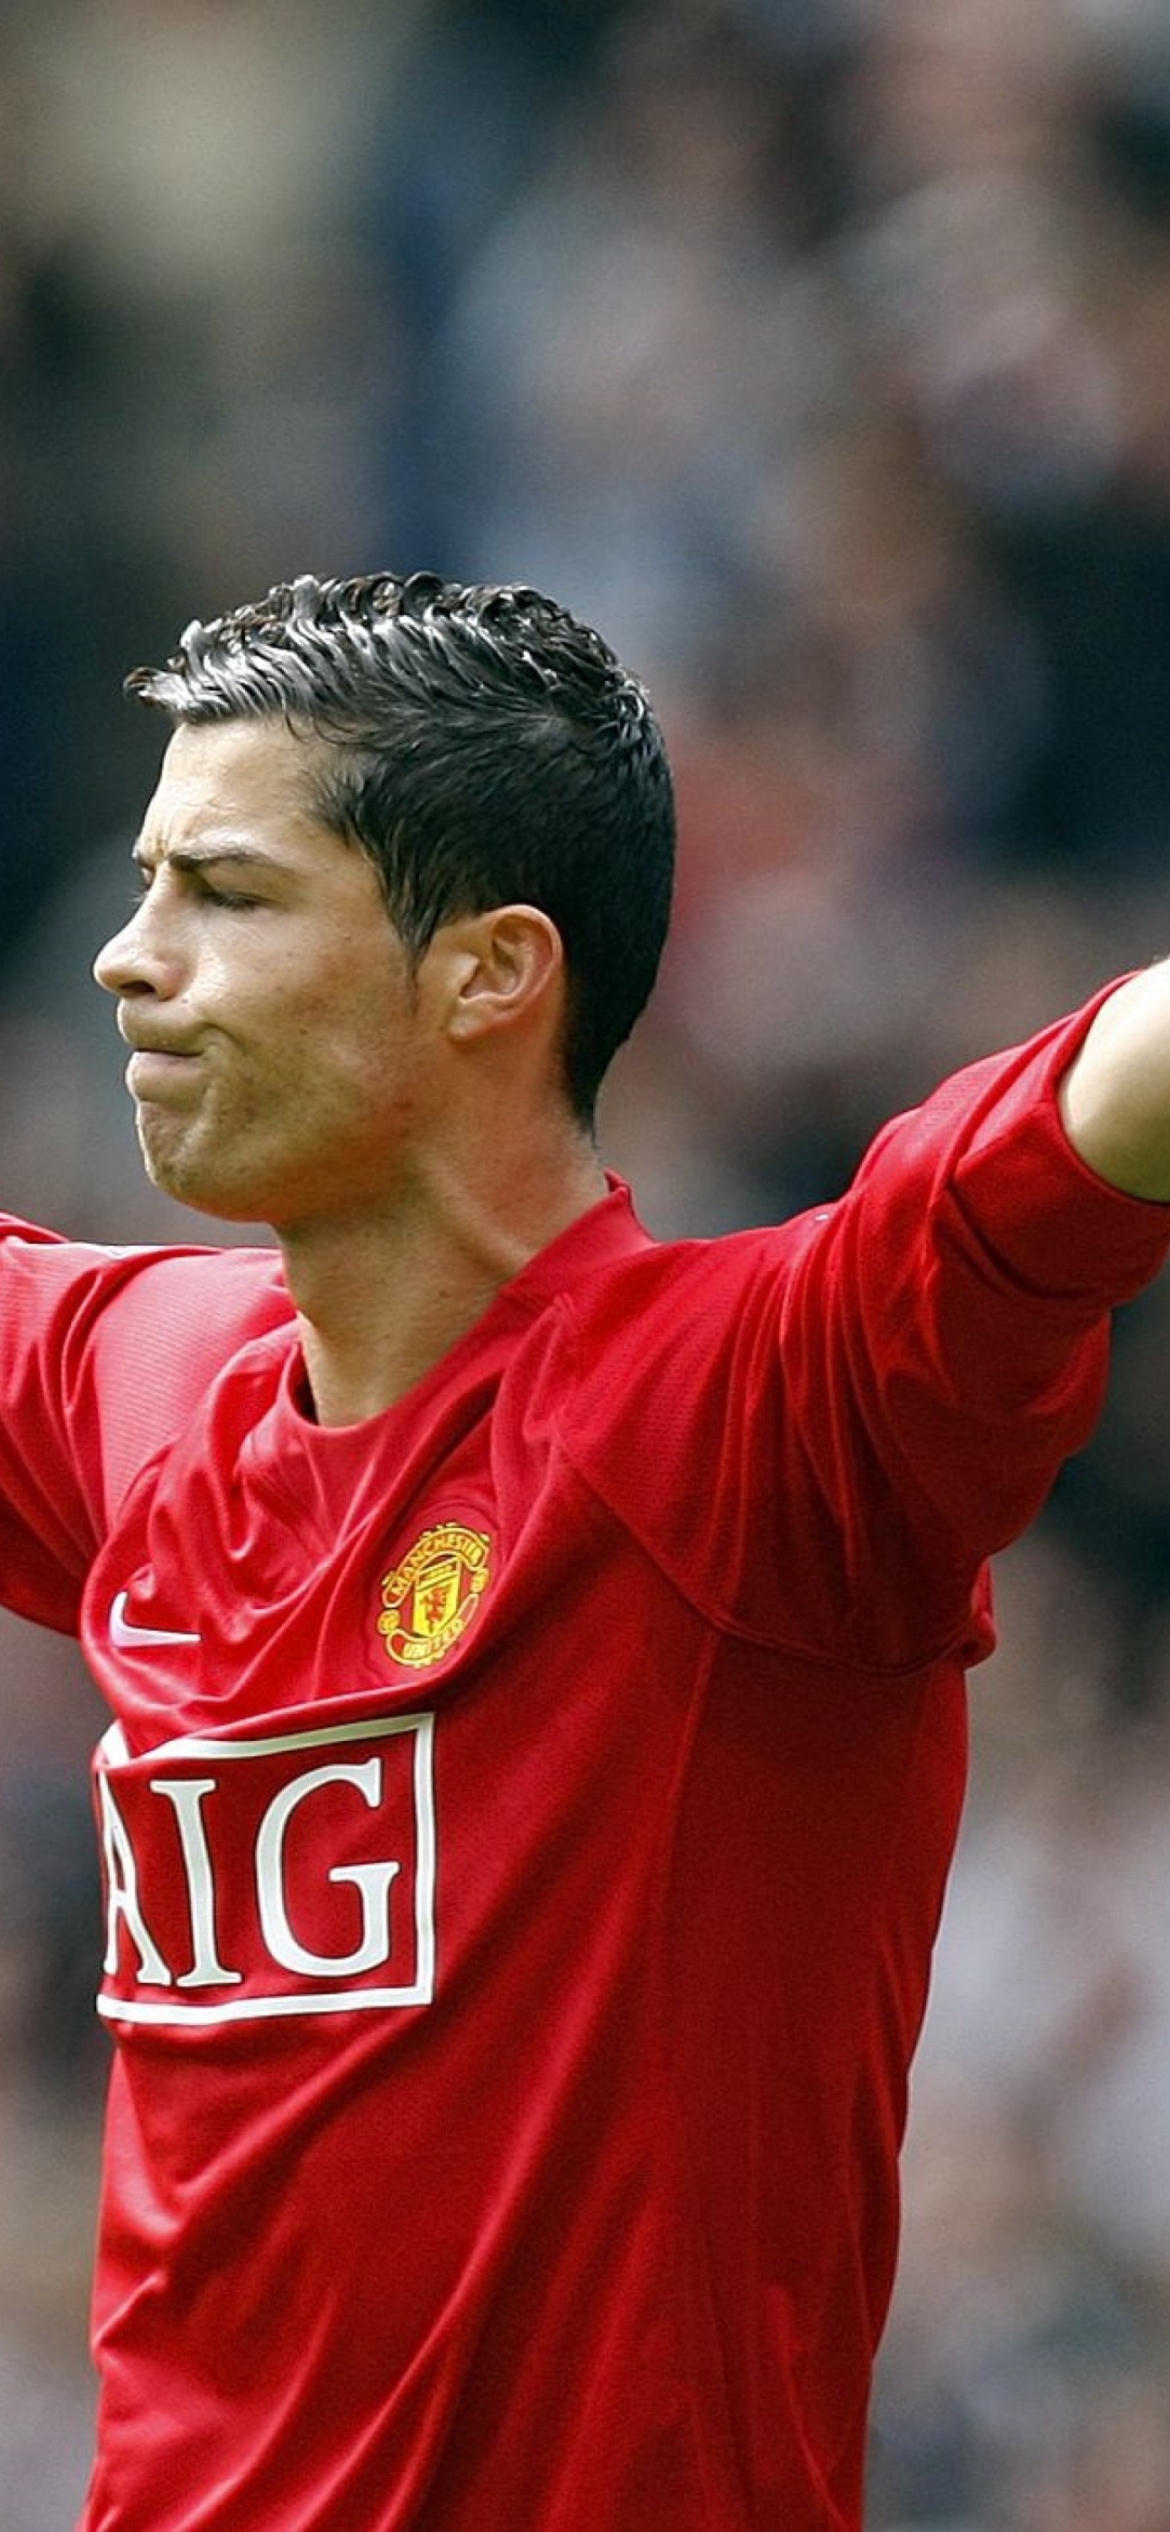 Обои Cristiano Ronaldo, Manchester United 1170x2532